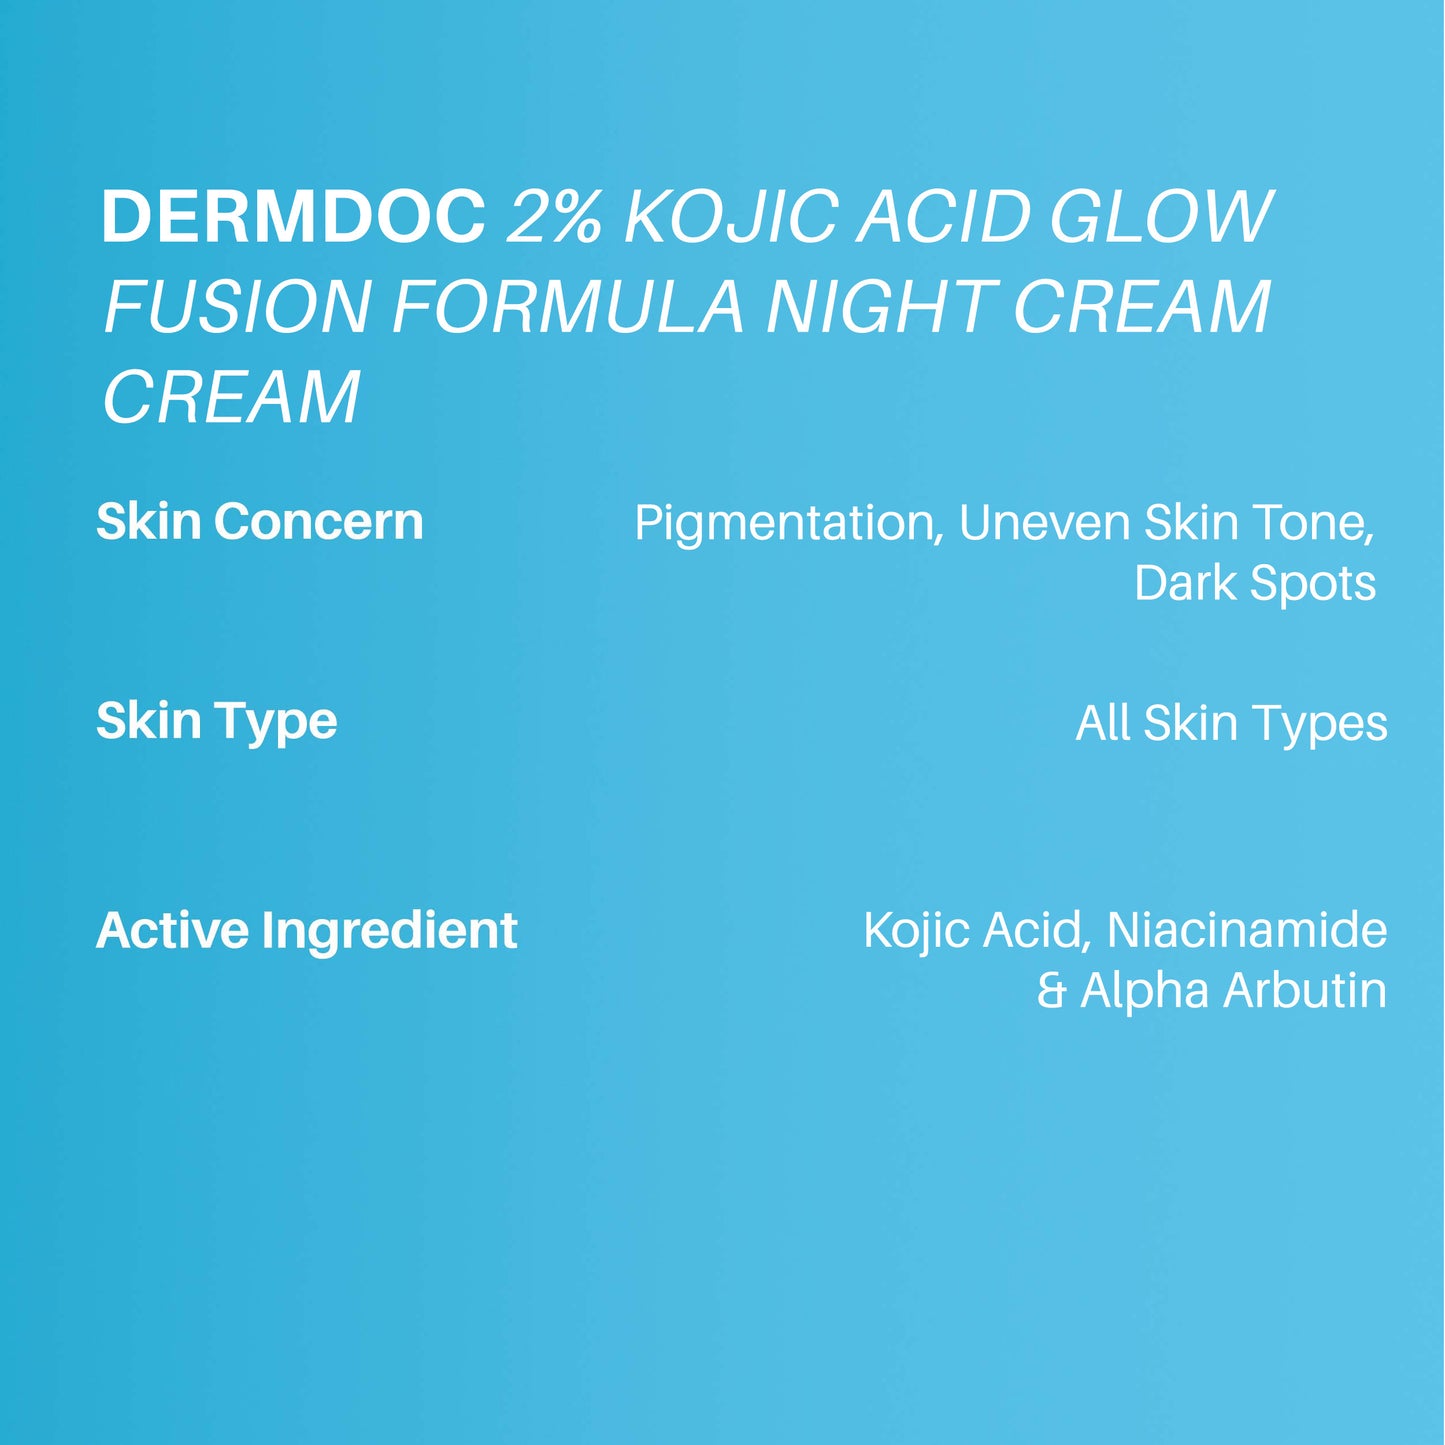 DermDoc 2% Kojic Acid Glow Fusion Formula Night Cream For Even-Toned and Bright Skin (50 g)